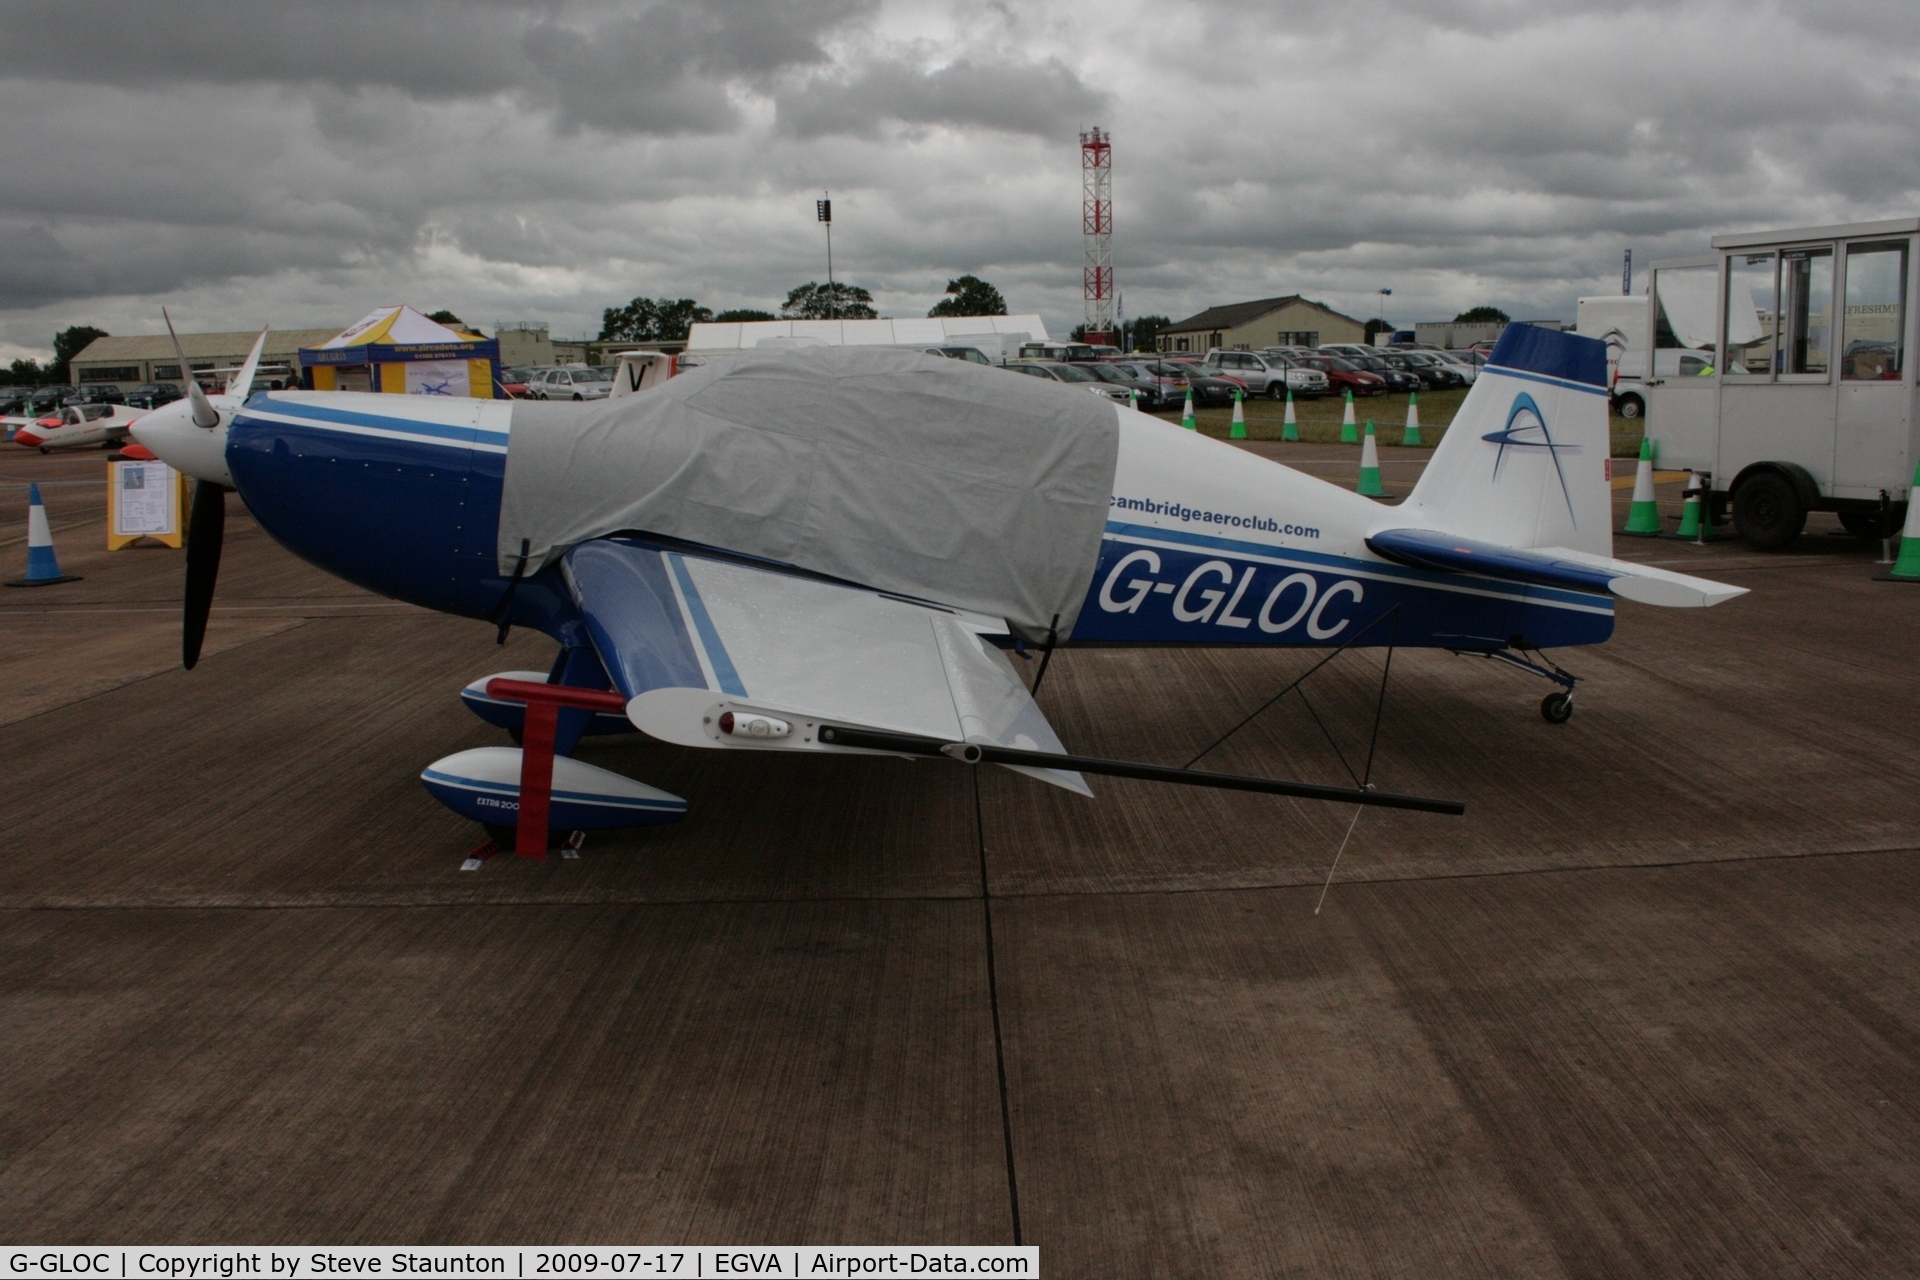 G-GLOC, 2007 Extra EA-300/200 C/N 1039, Taken at the Royal International Air Tattoo 2009